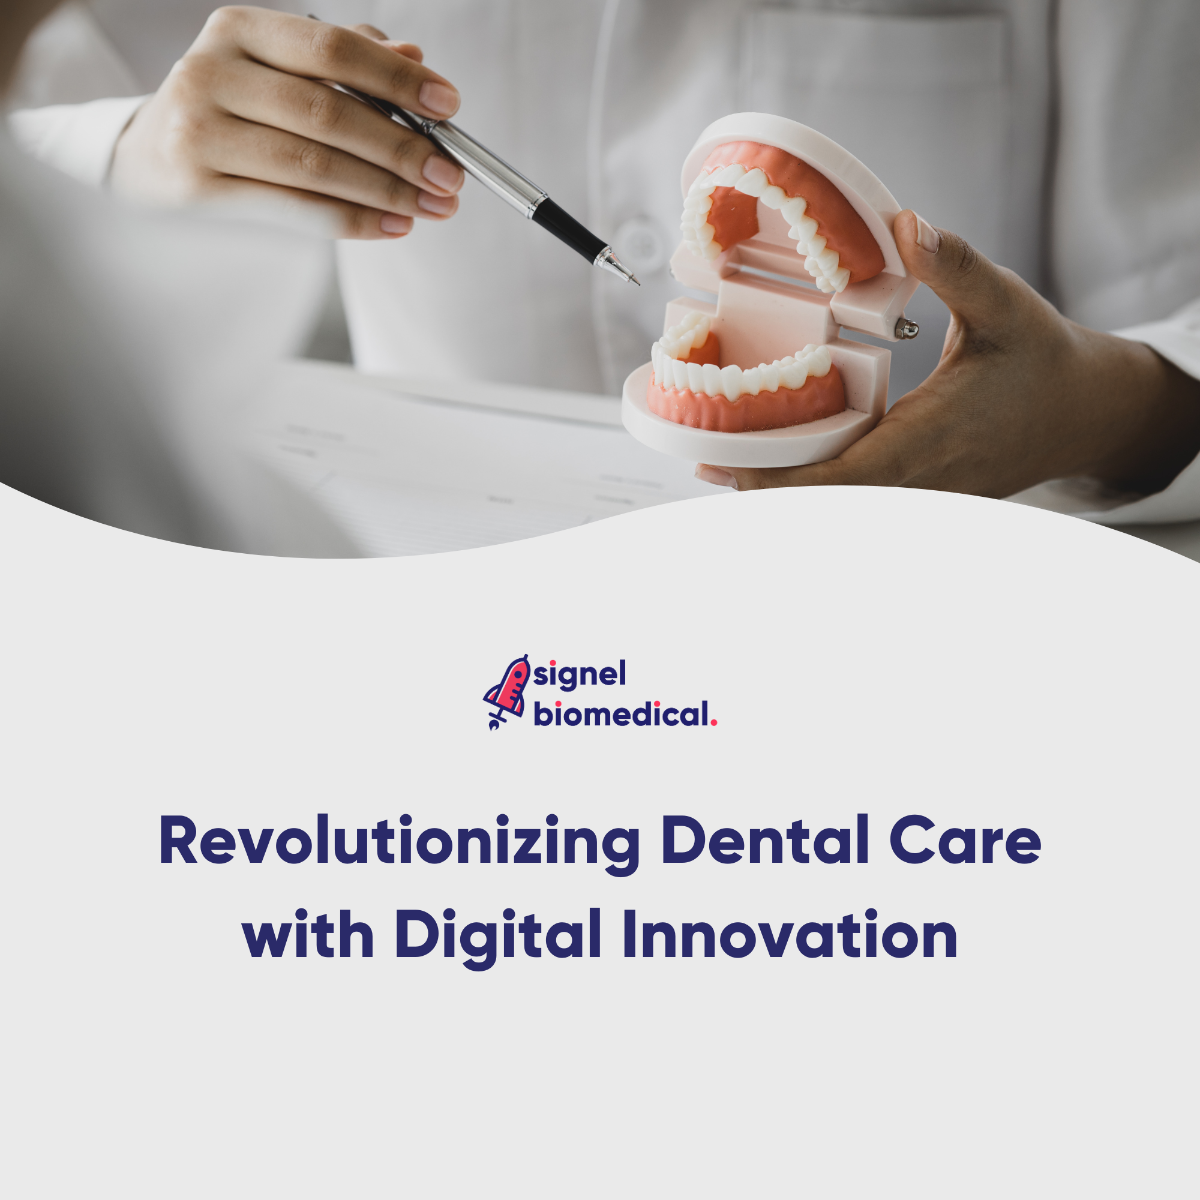 Integrating digital technology in Dental practices